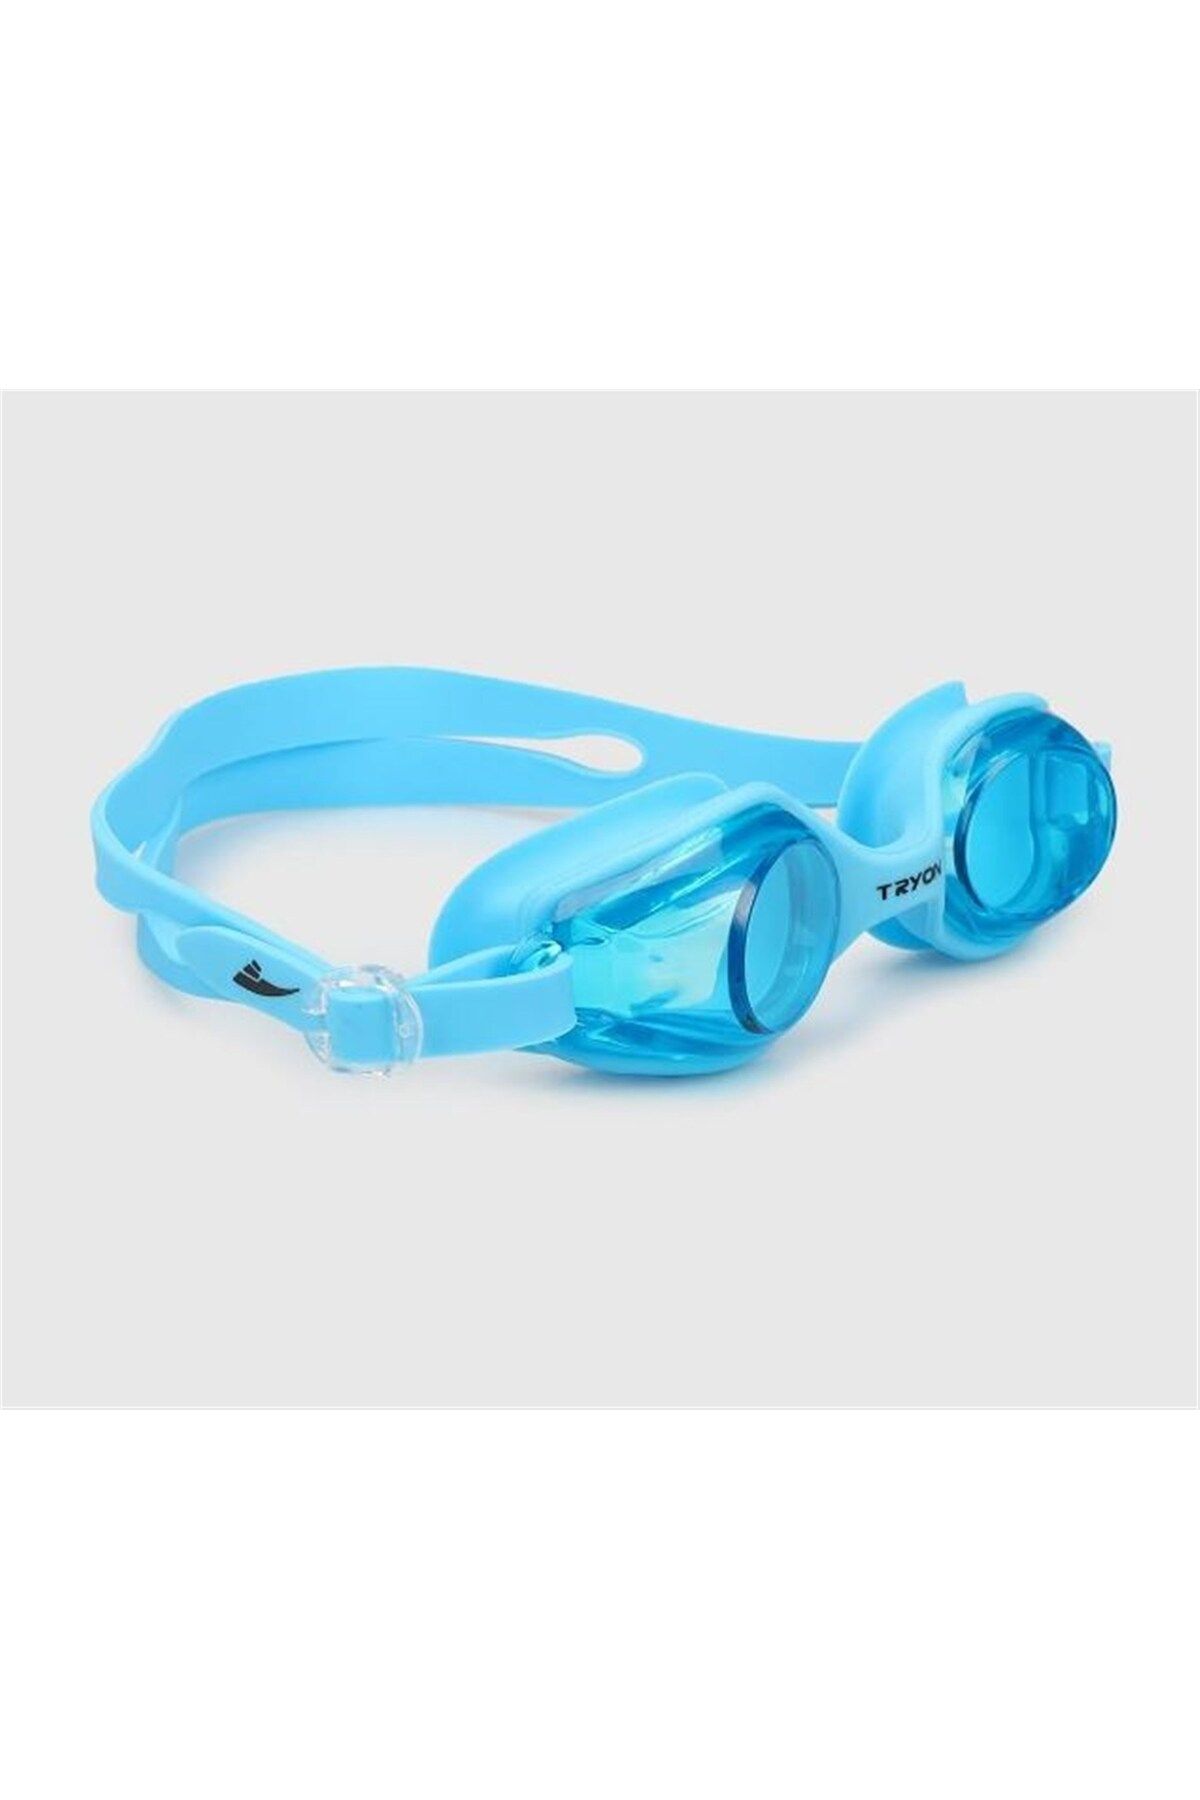 TRYON - Mavi Çocuk Yüzücü Gözlüğü - YG-2030